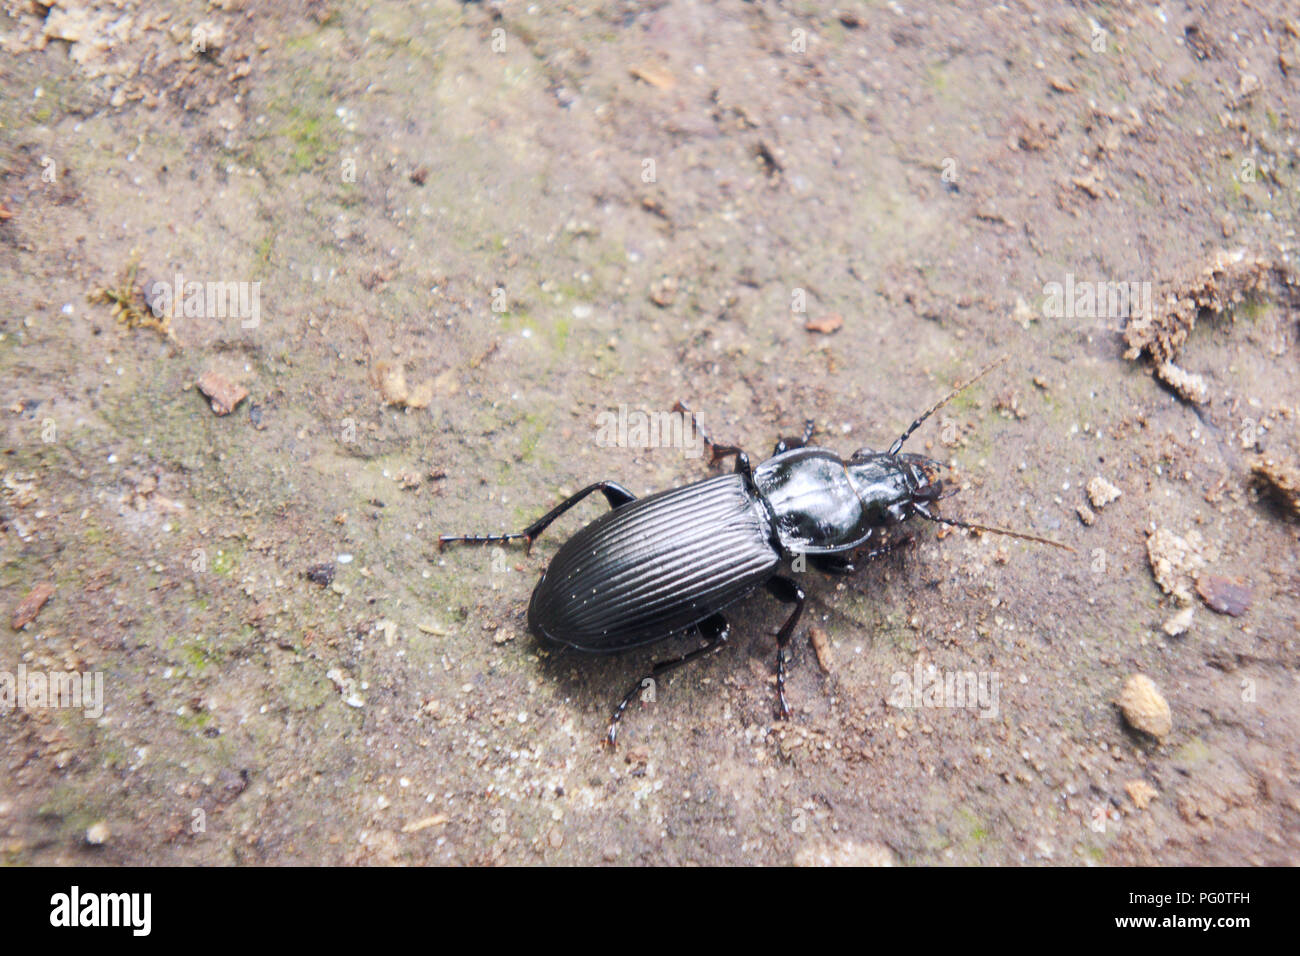 A black ground beetle on muddy soil. Stock Photo